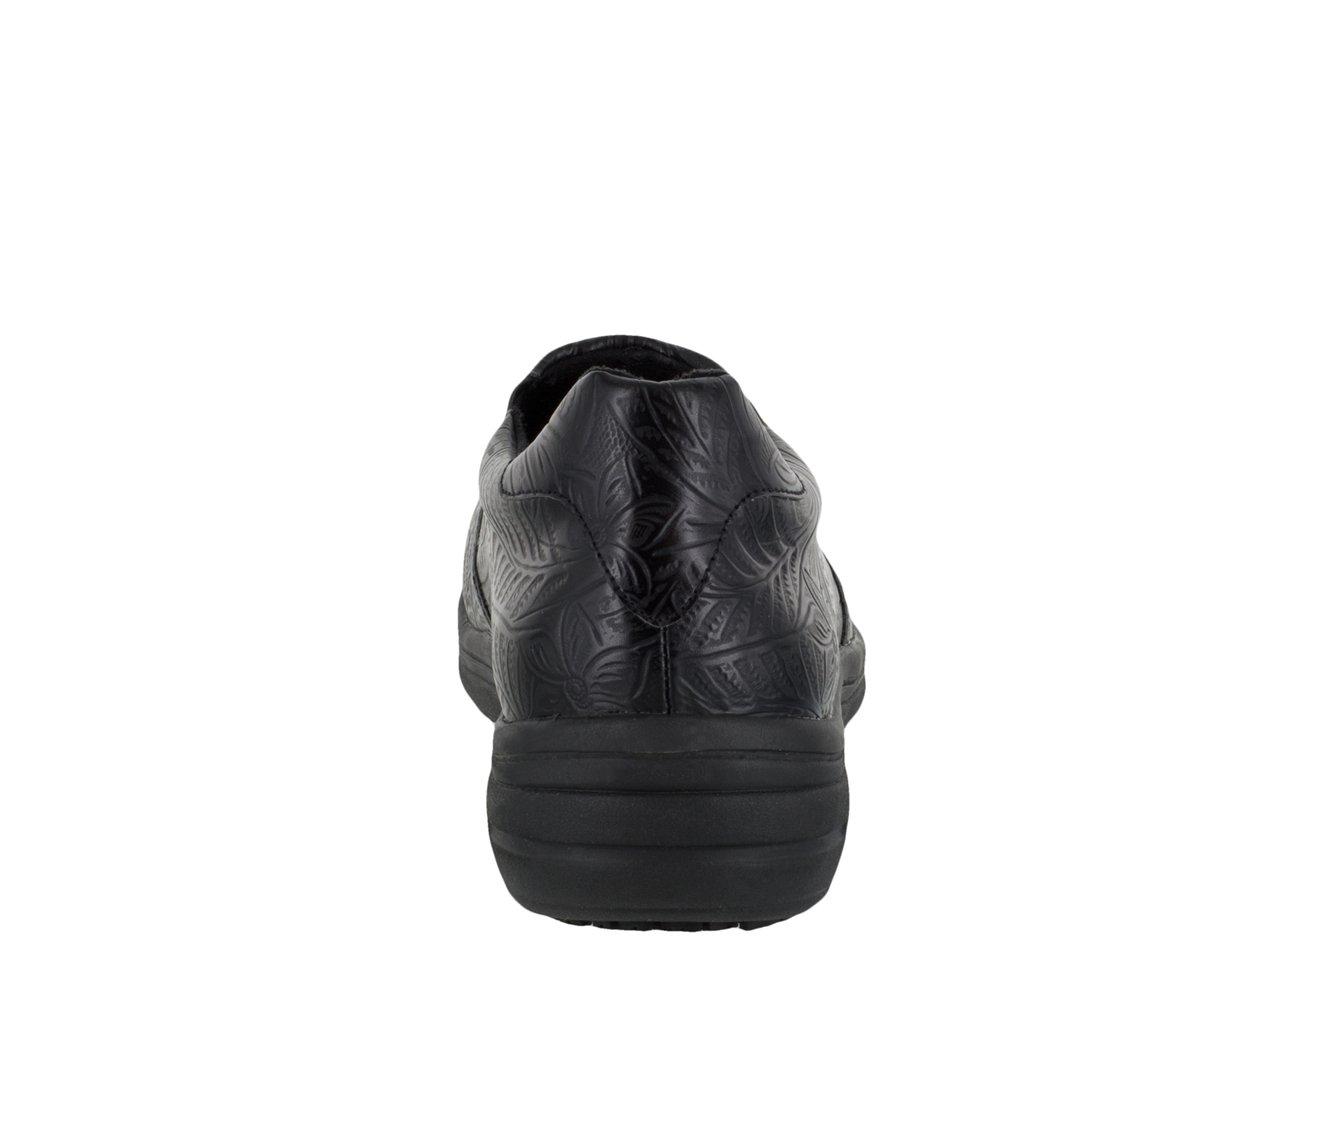 Women's Easy Works by Street Bind Embossed Leather Slip-Resistant Clogs